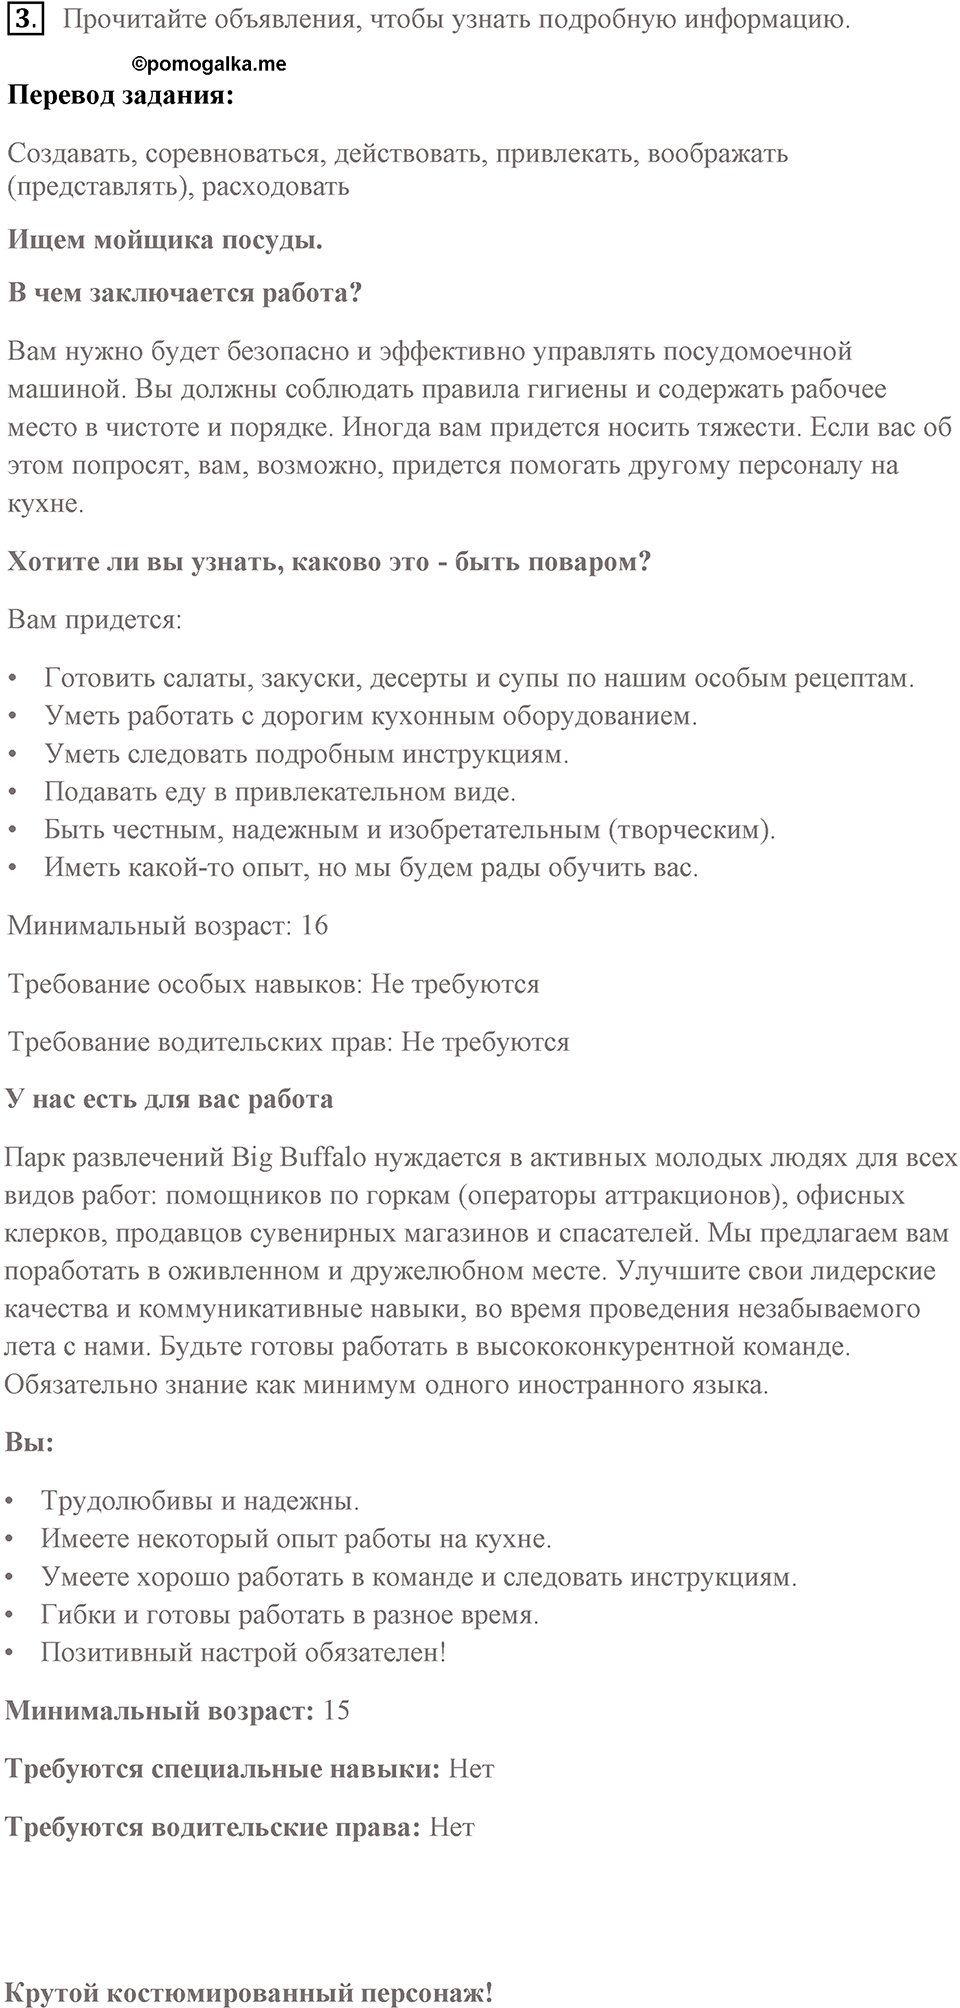 Unit 6 lesson 5-6 exercise №3 английский язык 9 класс Happy English.ru